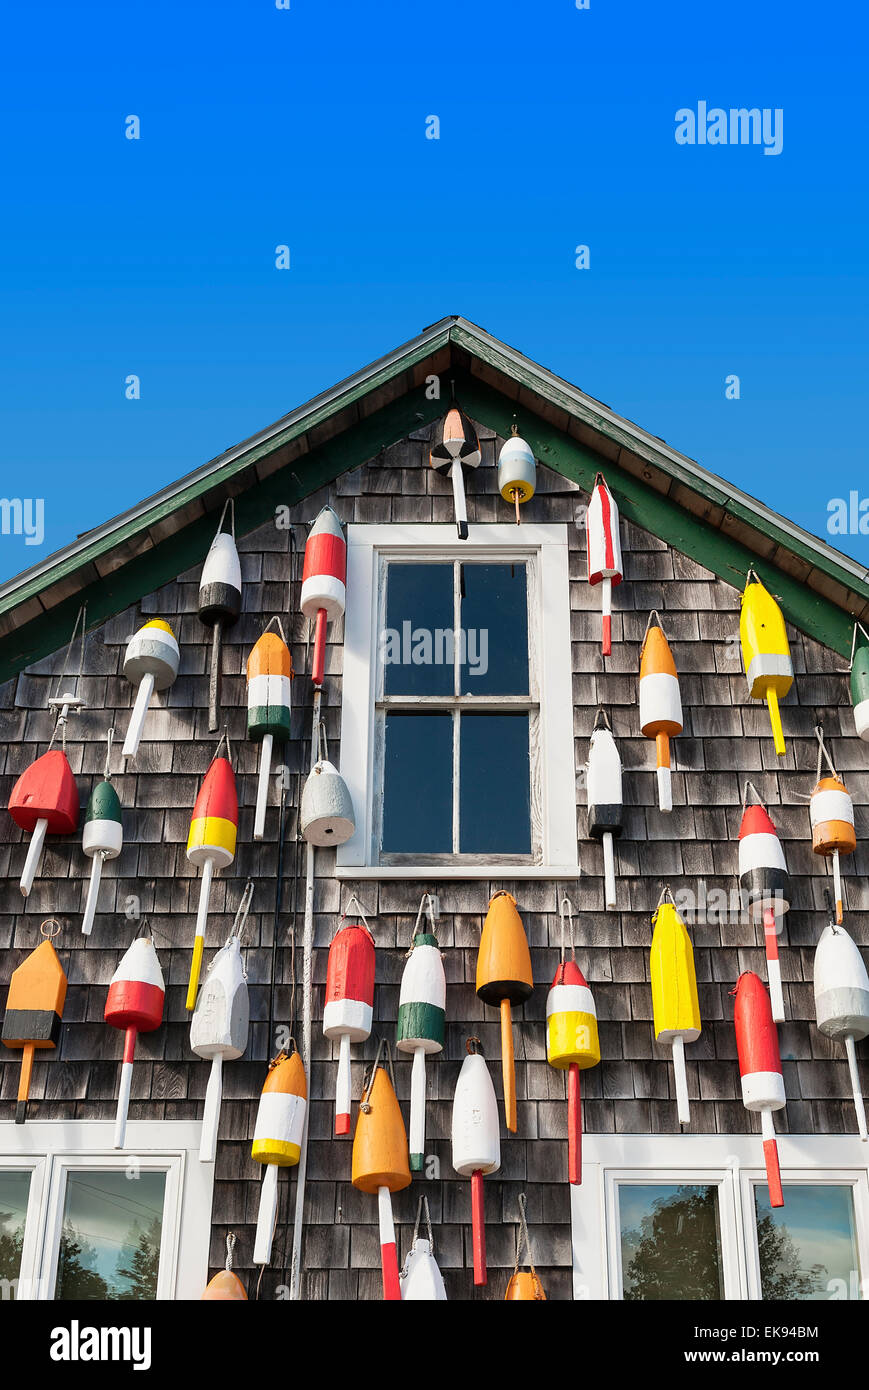 Buoys hung on the facade of a rustic coastal shack, Maine, USA Stock Photo